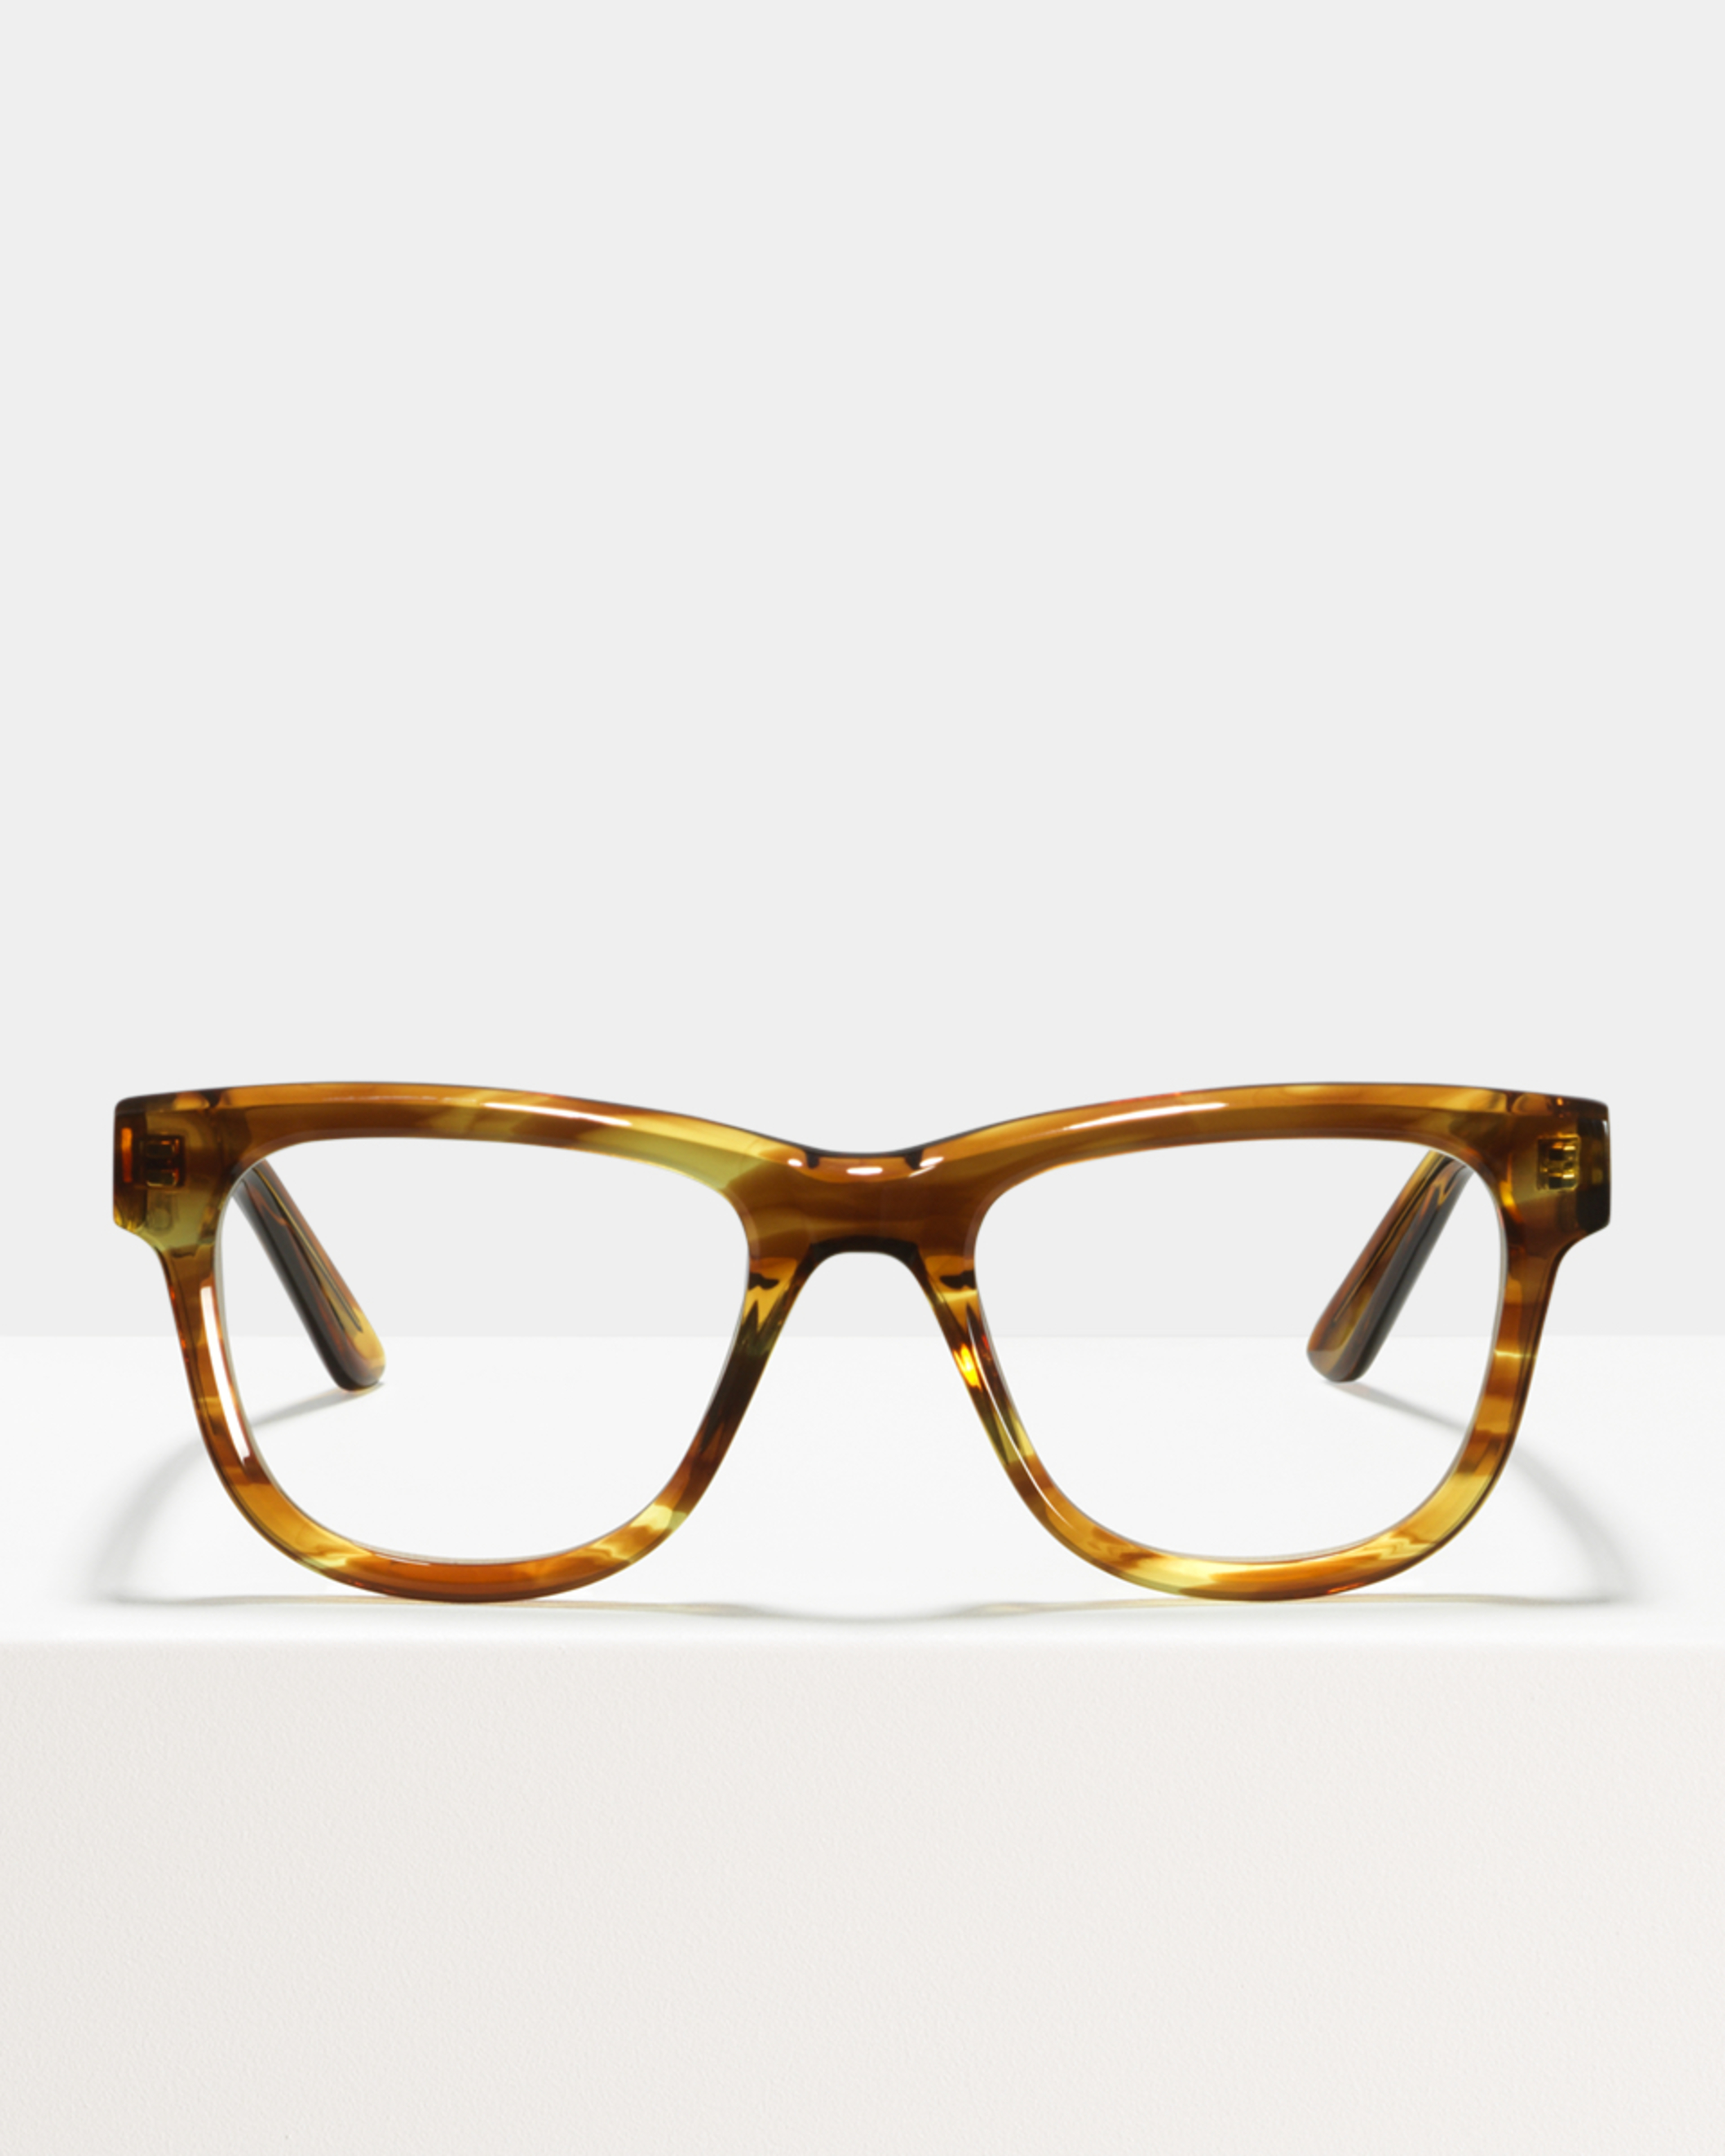 Ace & Tate Glasses | rectangulares acetato in Marrón, Naranja